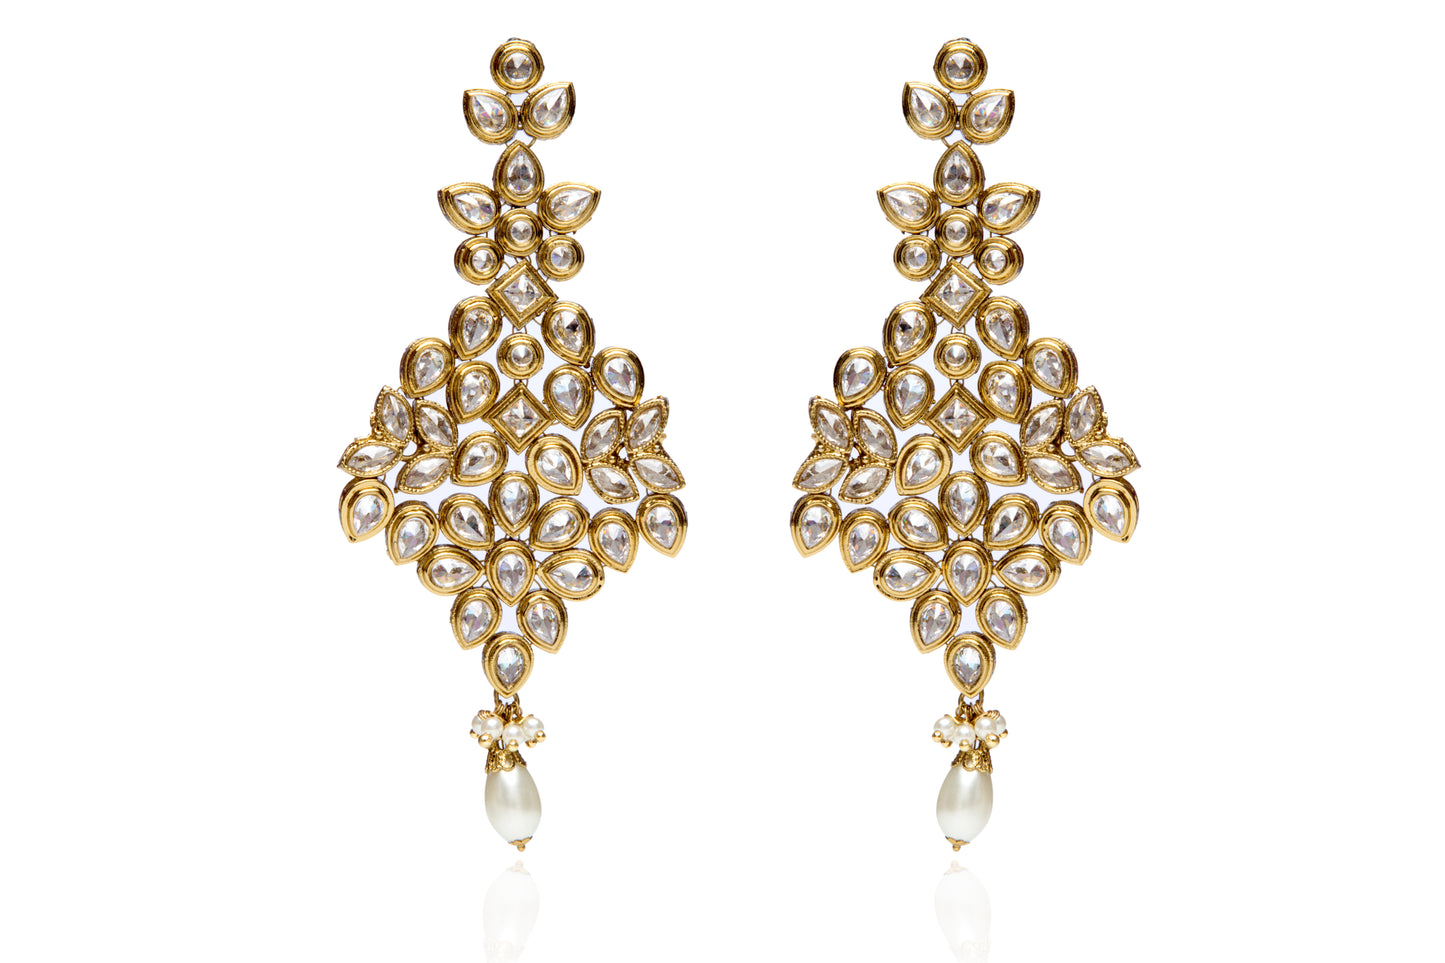 Kundan dangler earrings with pearl drop